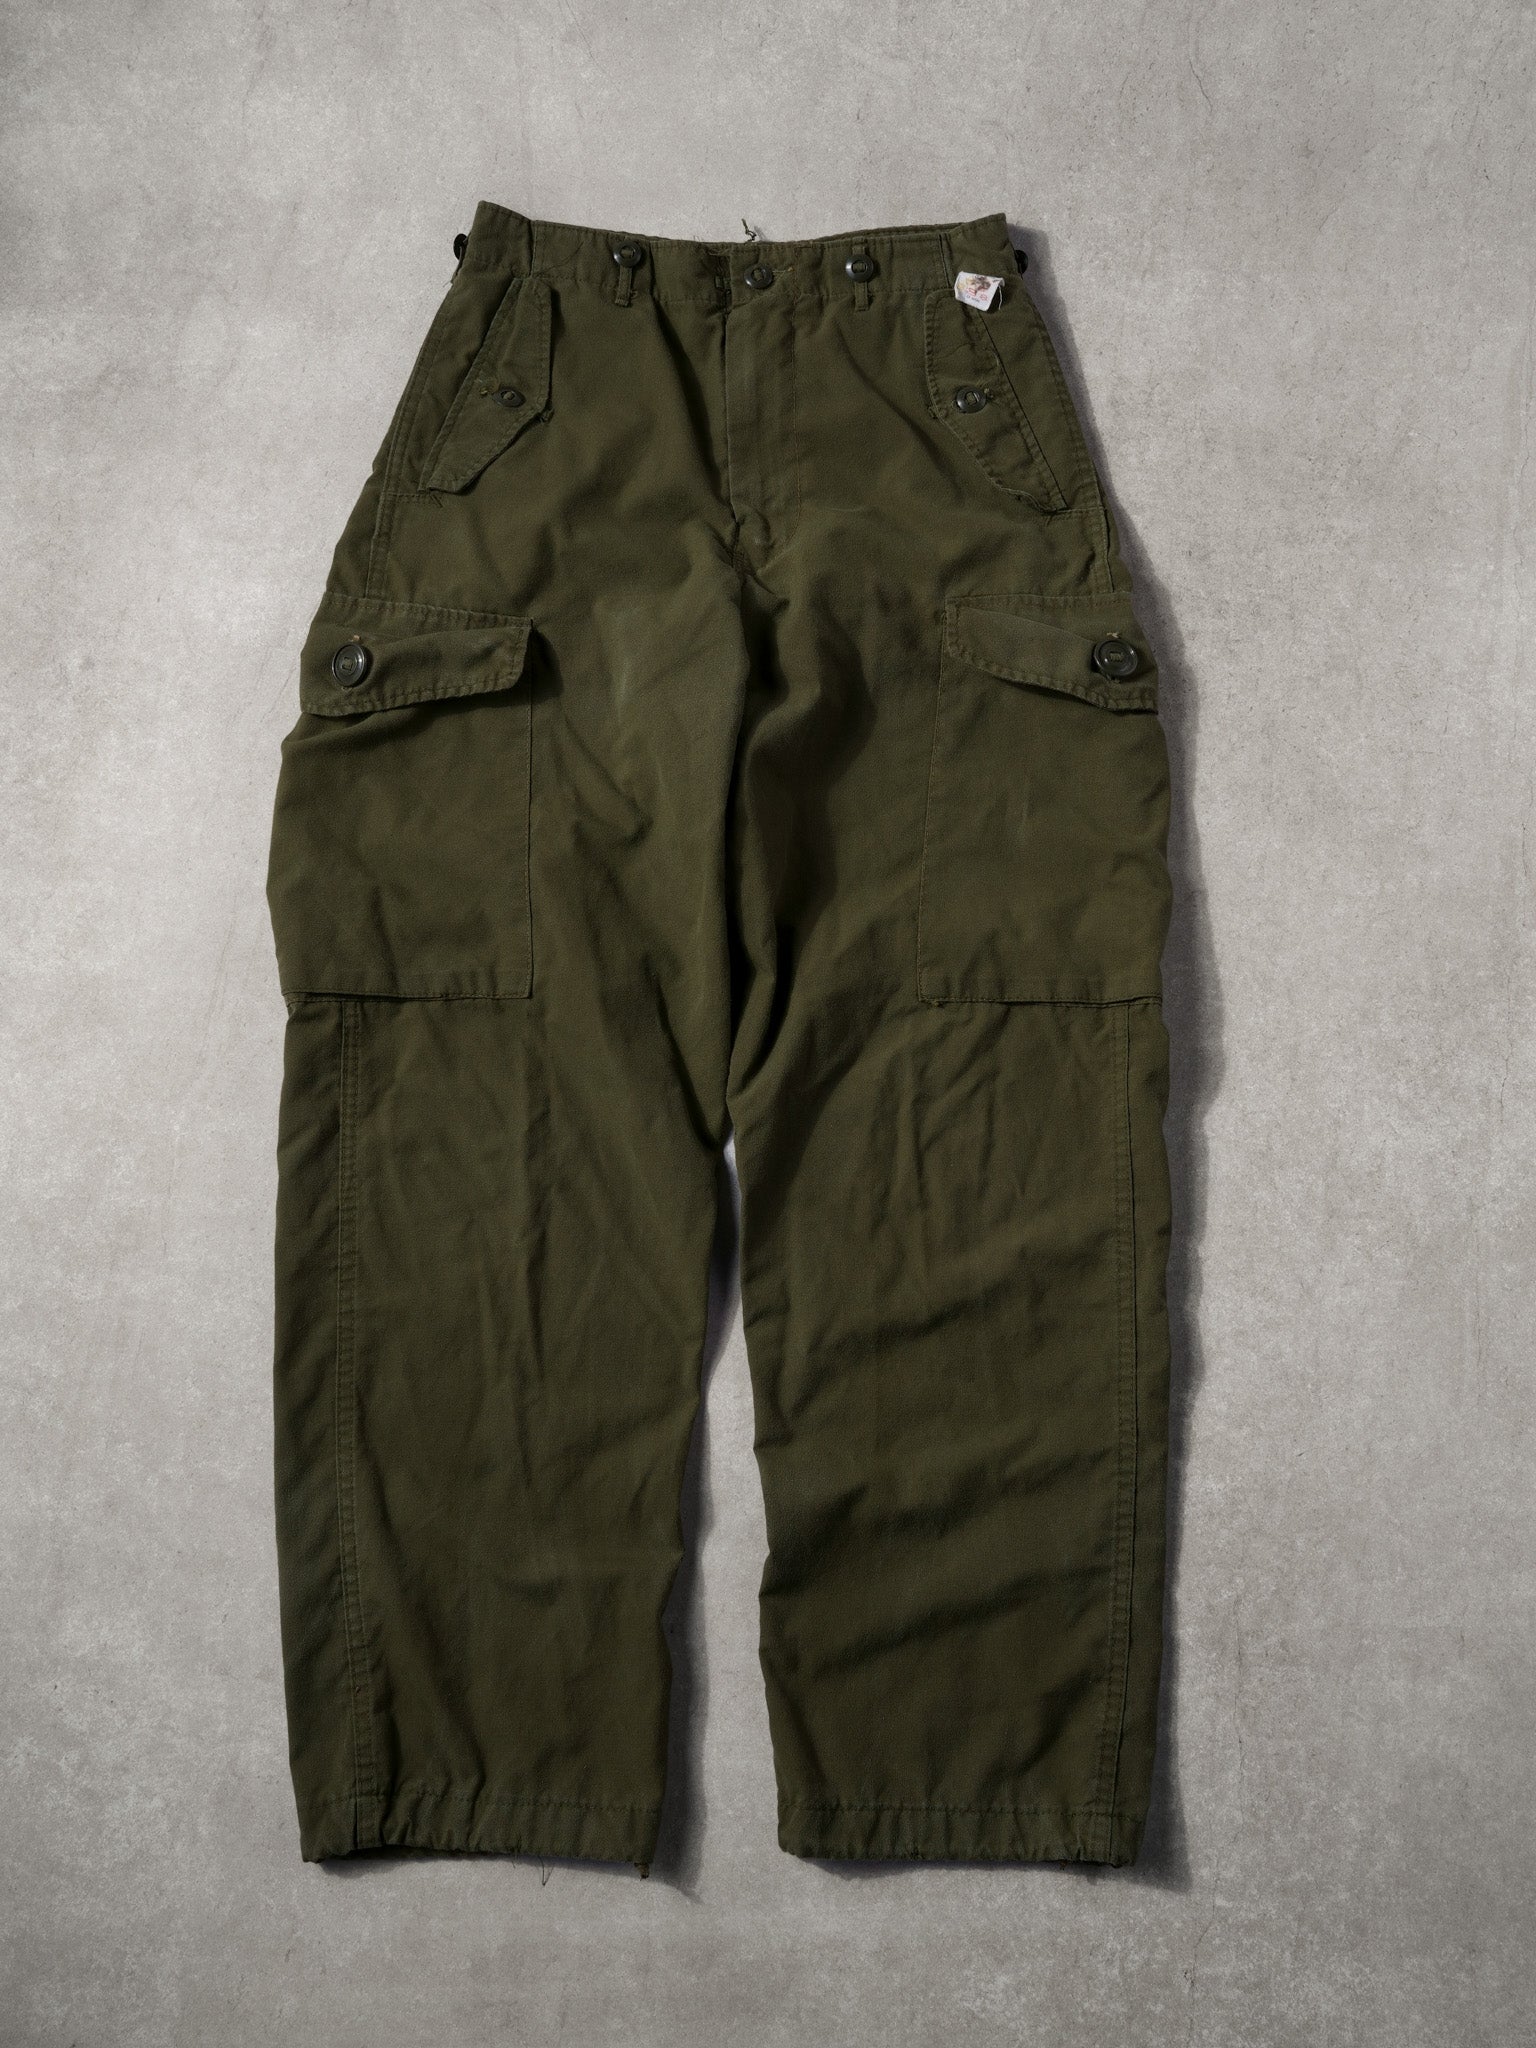 Vintage 80s Green Army Parachute Pants (32x30)